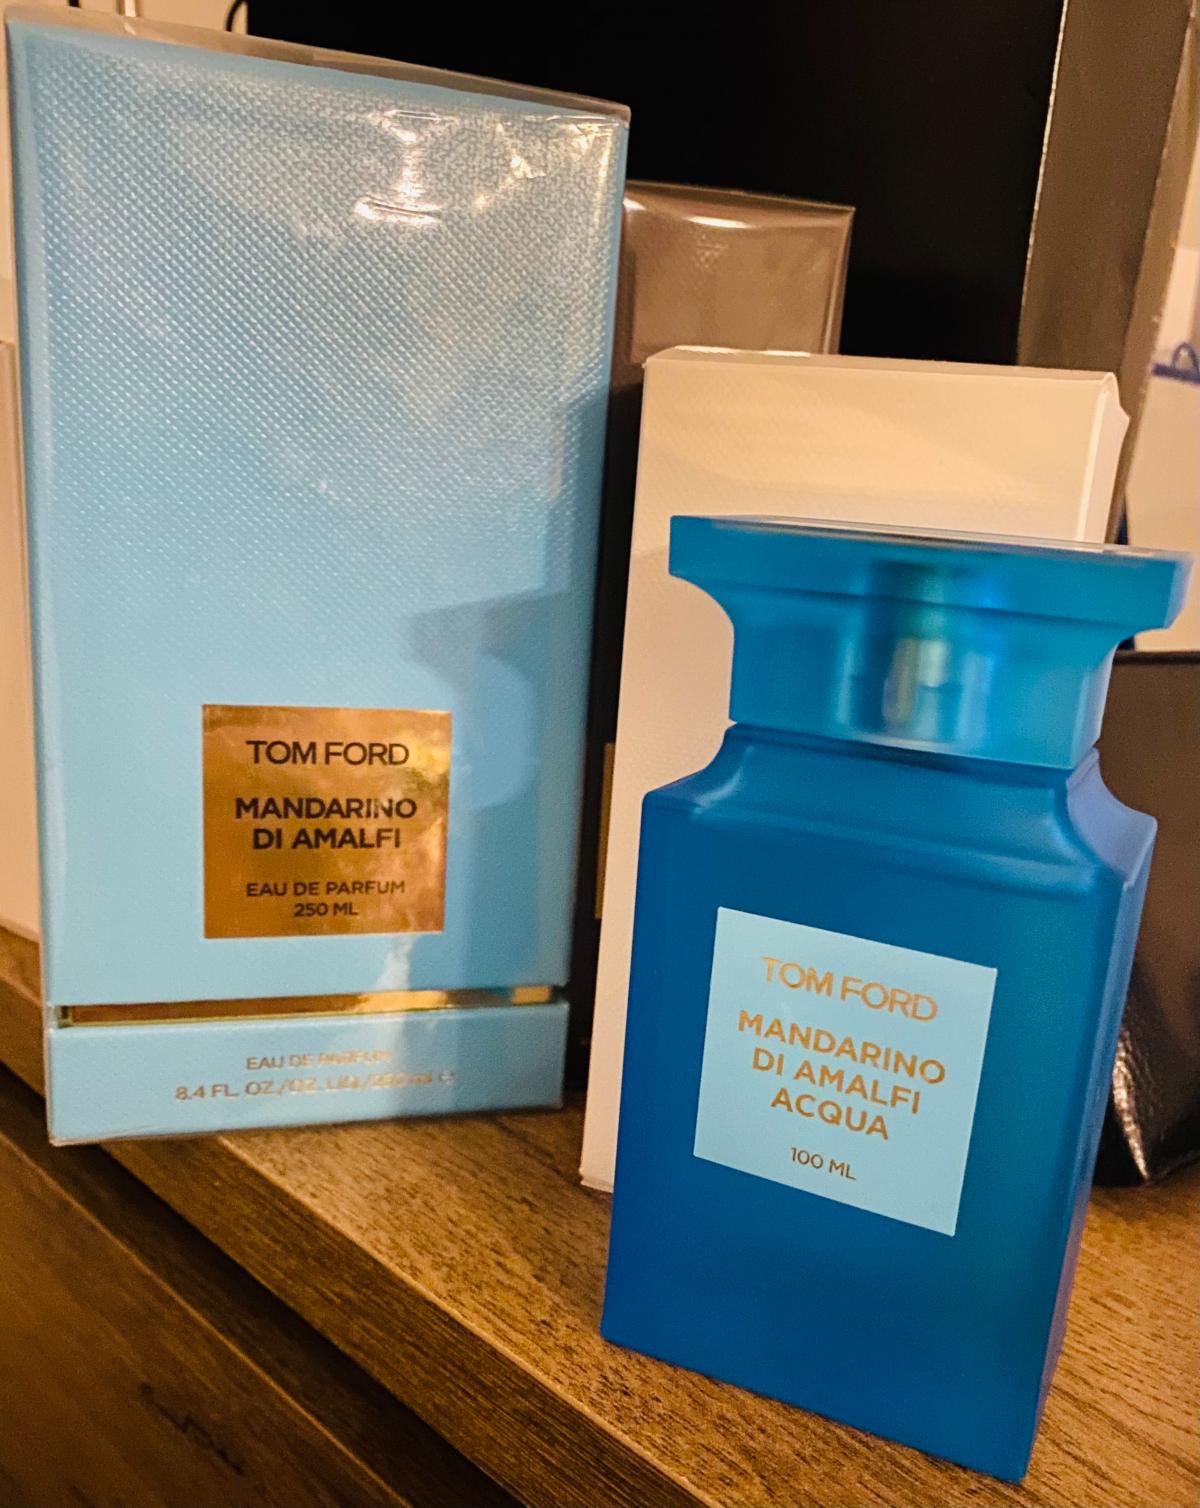 Mandarino di Amalfi Tom Ford perfume - a fragrance for women and men 2014